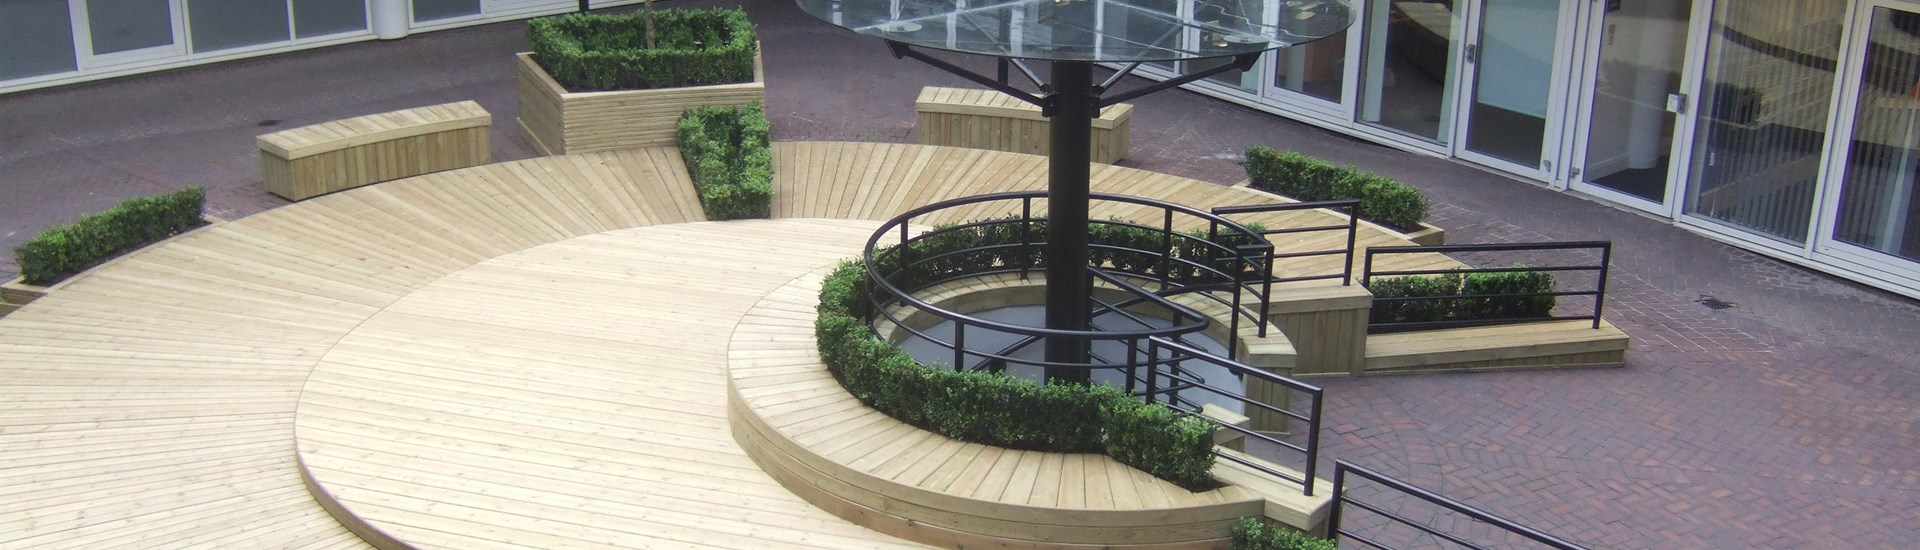 Timber Decking Designers Installers | Decking Company UK